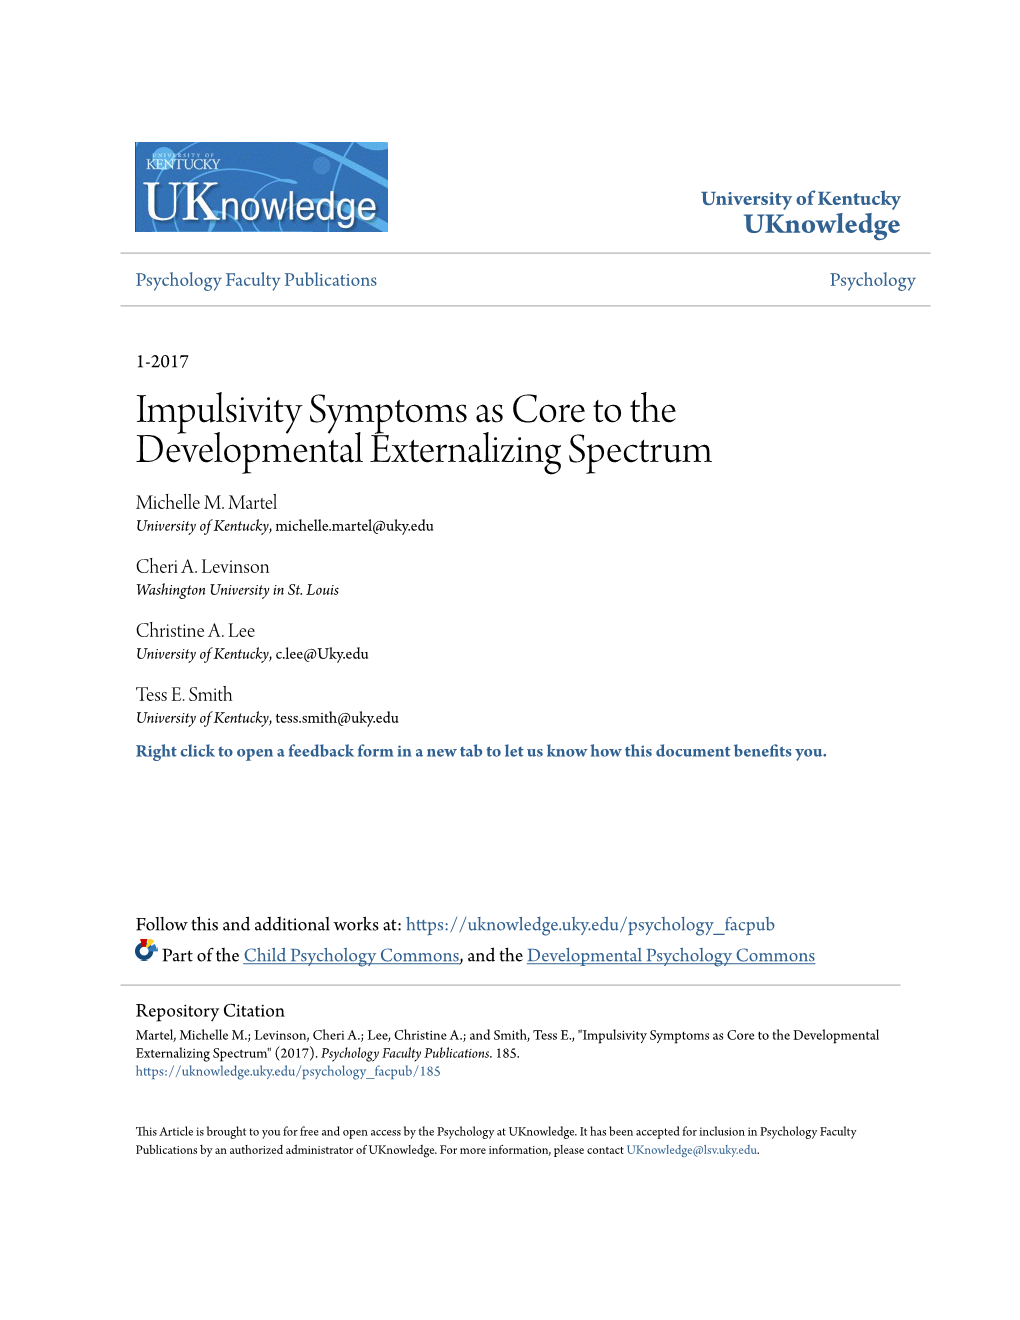 Impulsivity Symptoms As Core to the Developmental Externalizing Spectrum Michelle M